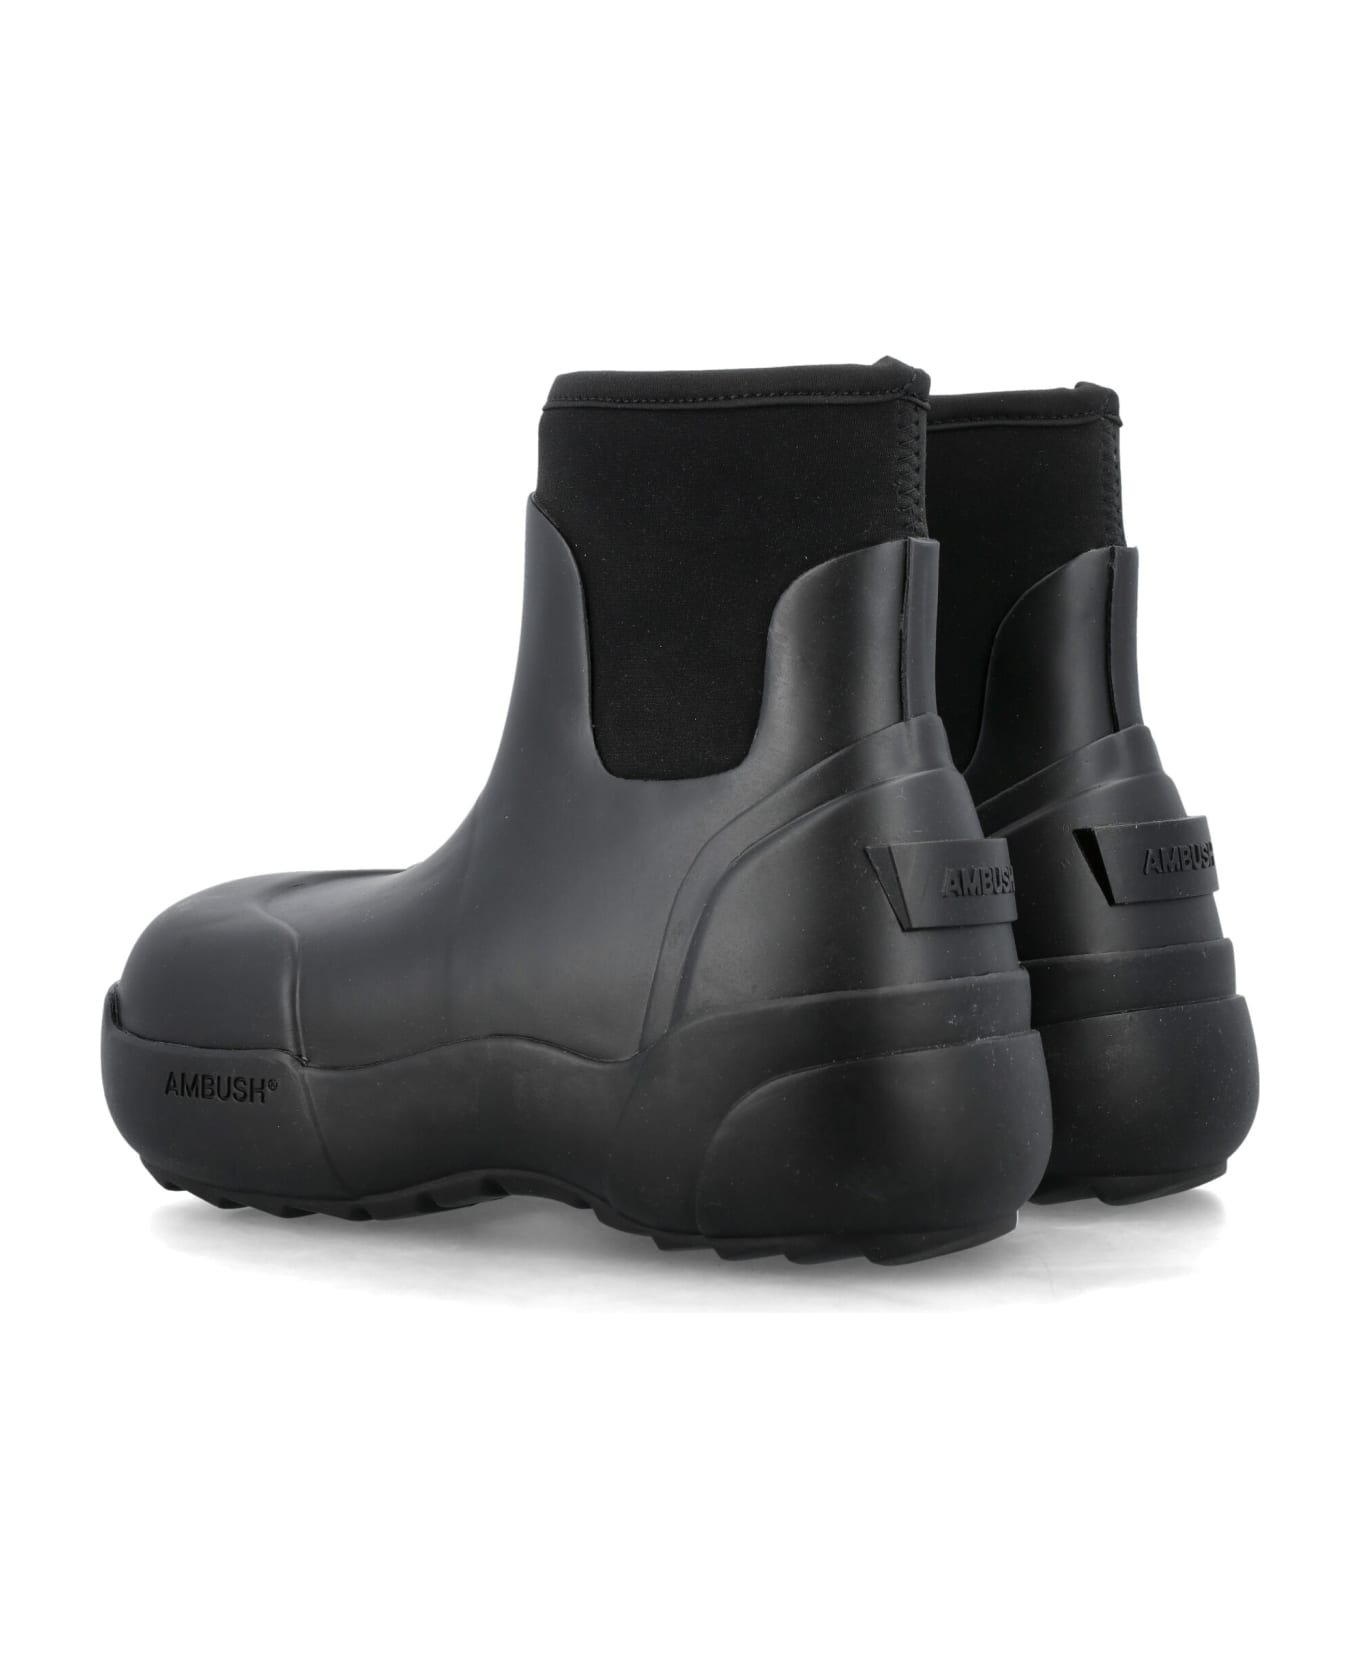 AMBUSH Rubber Boots - BLACK